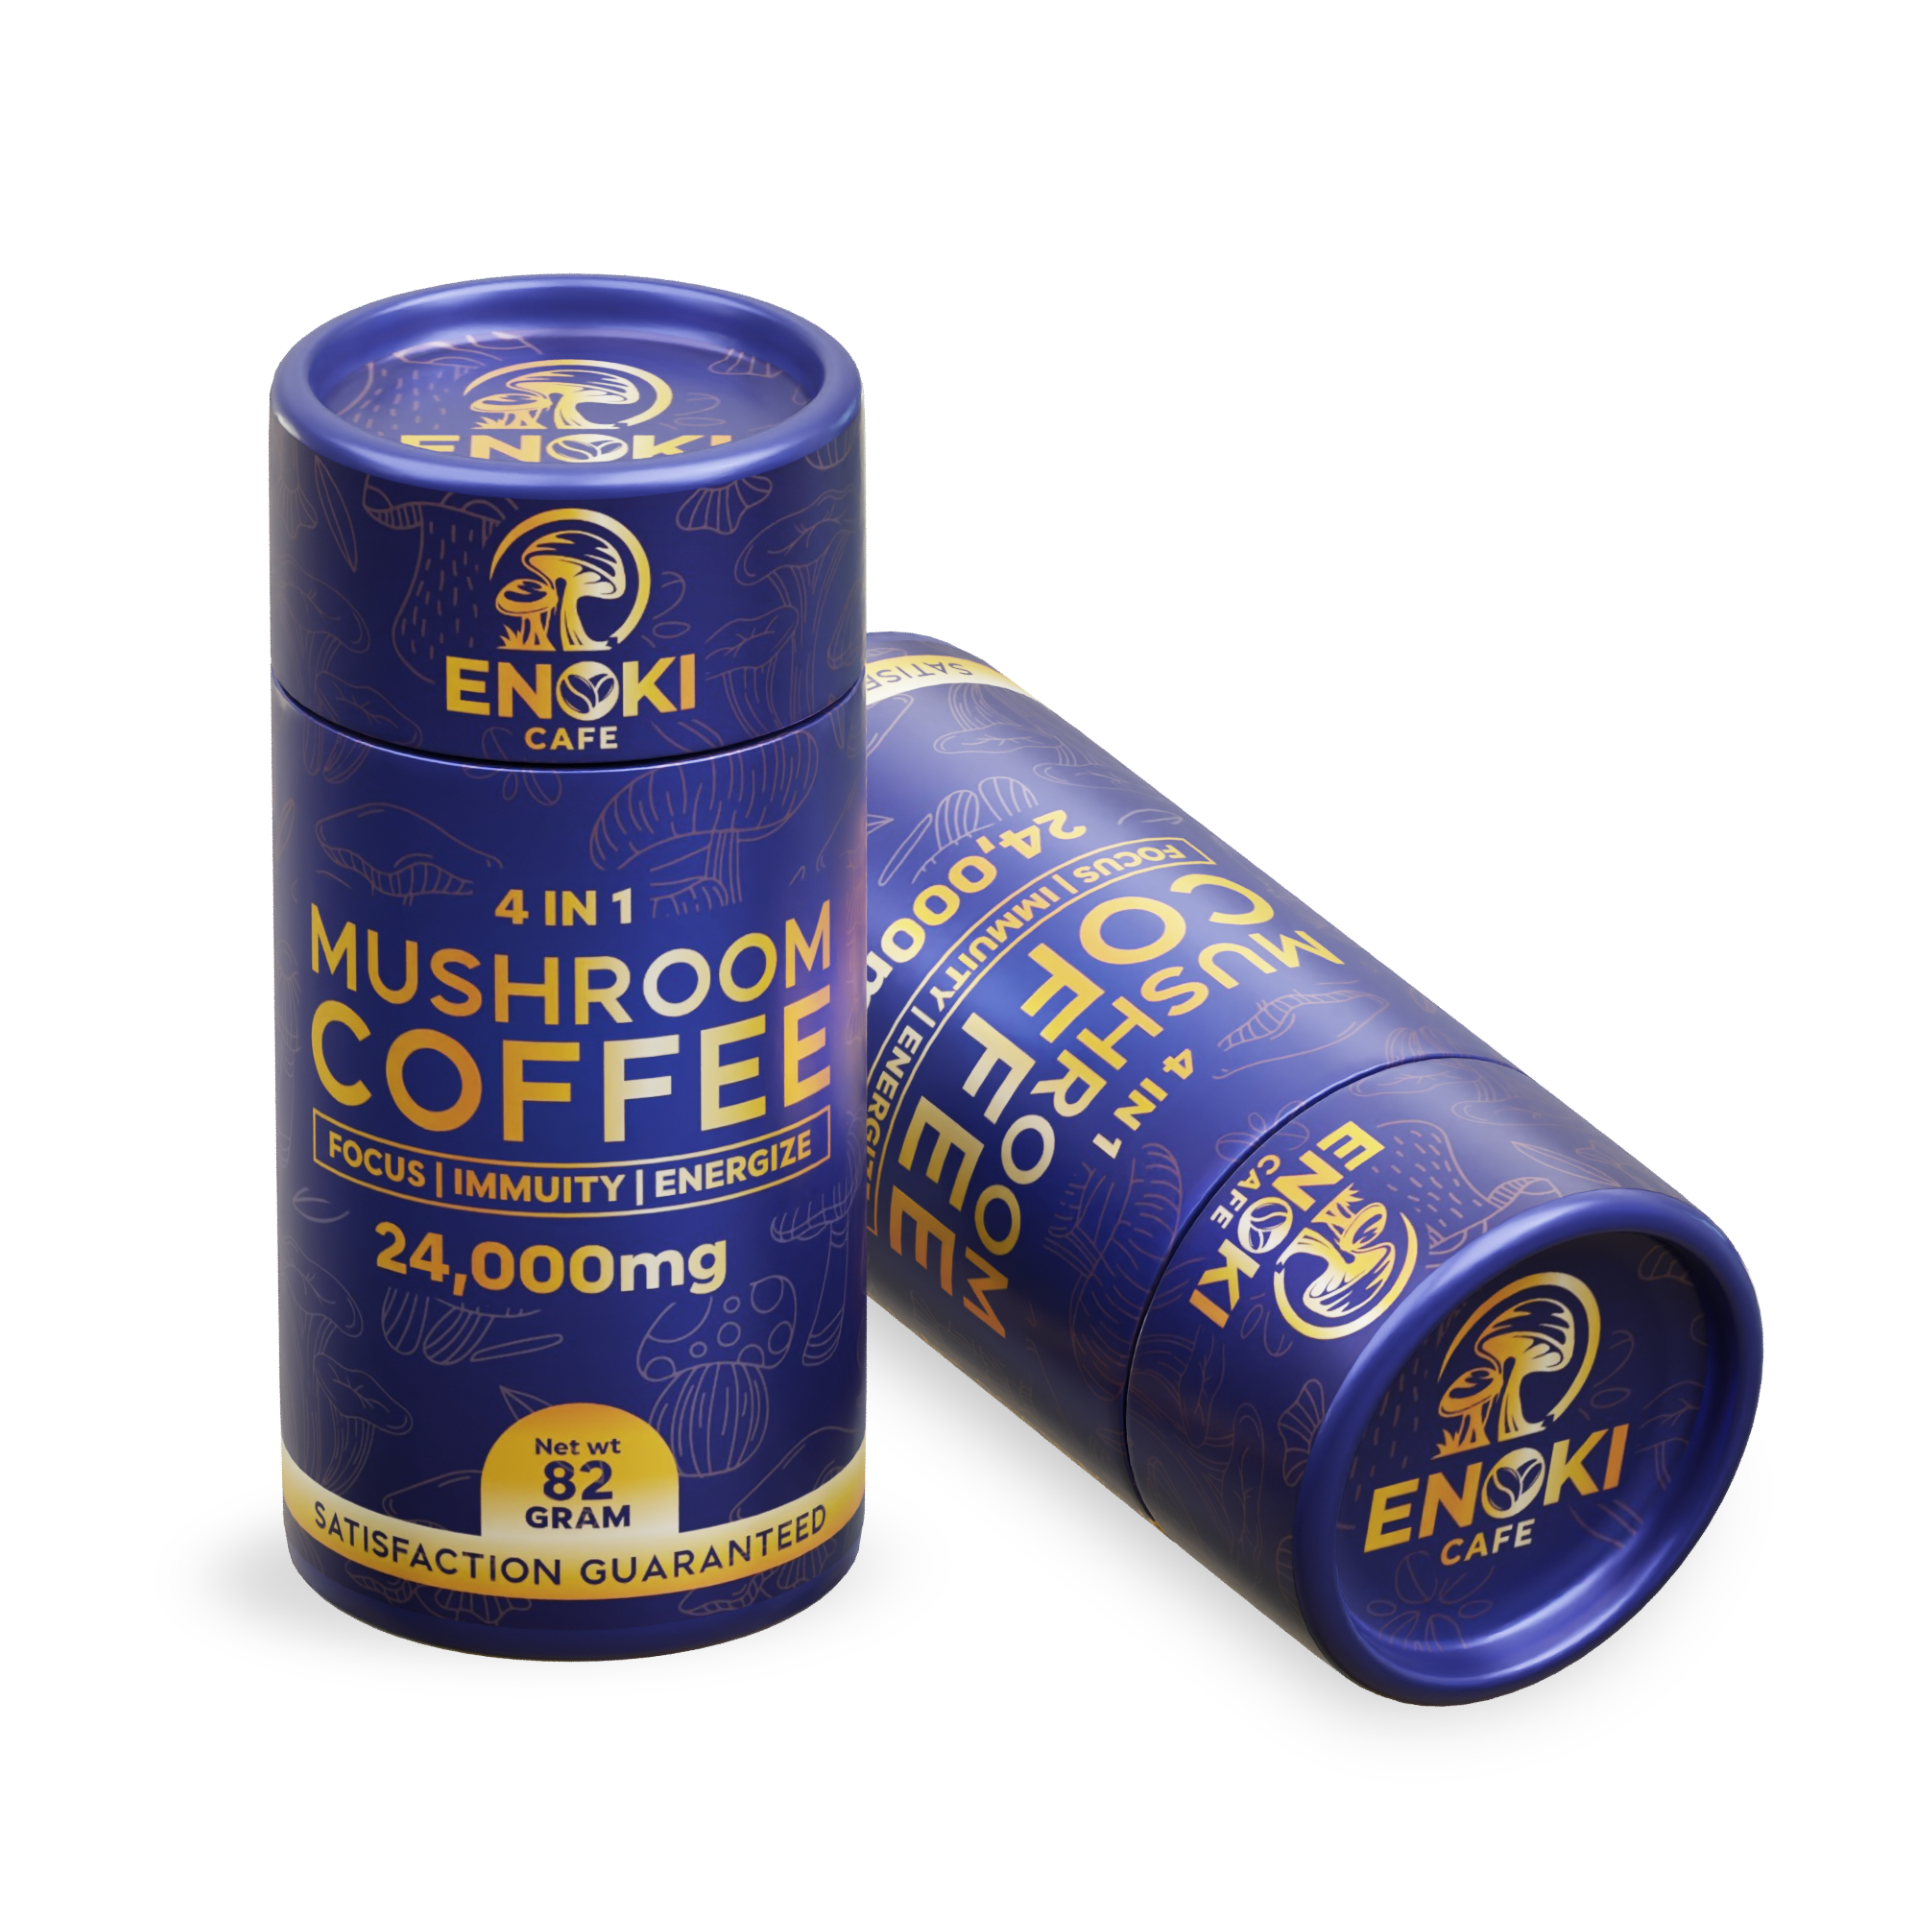 Royal Mushroom 4 in 1 Mushroom Coffee (24,000mg)